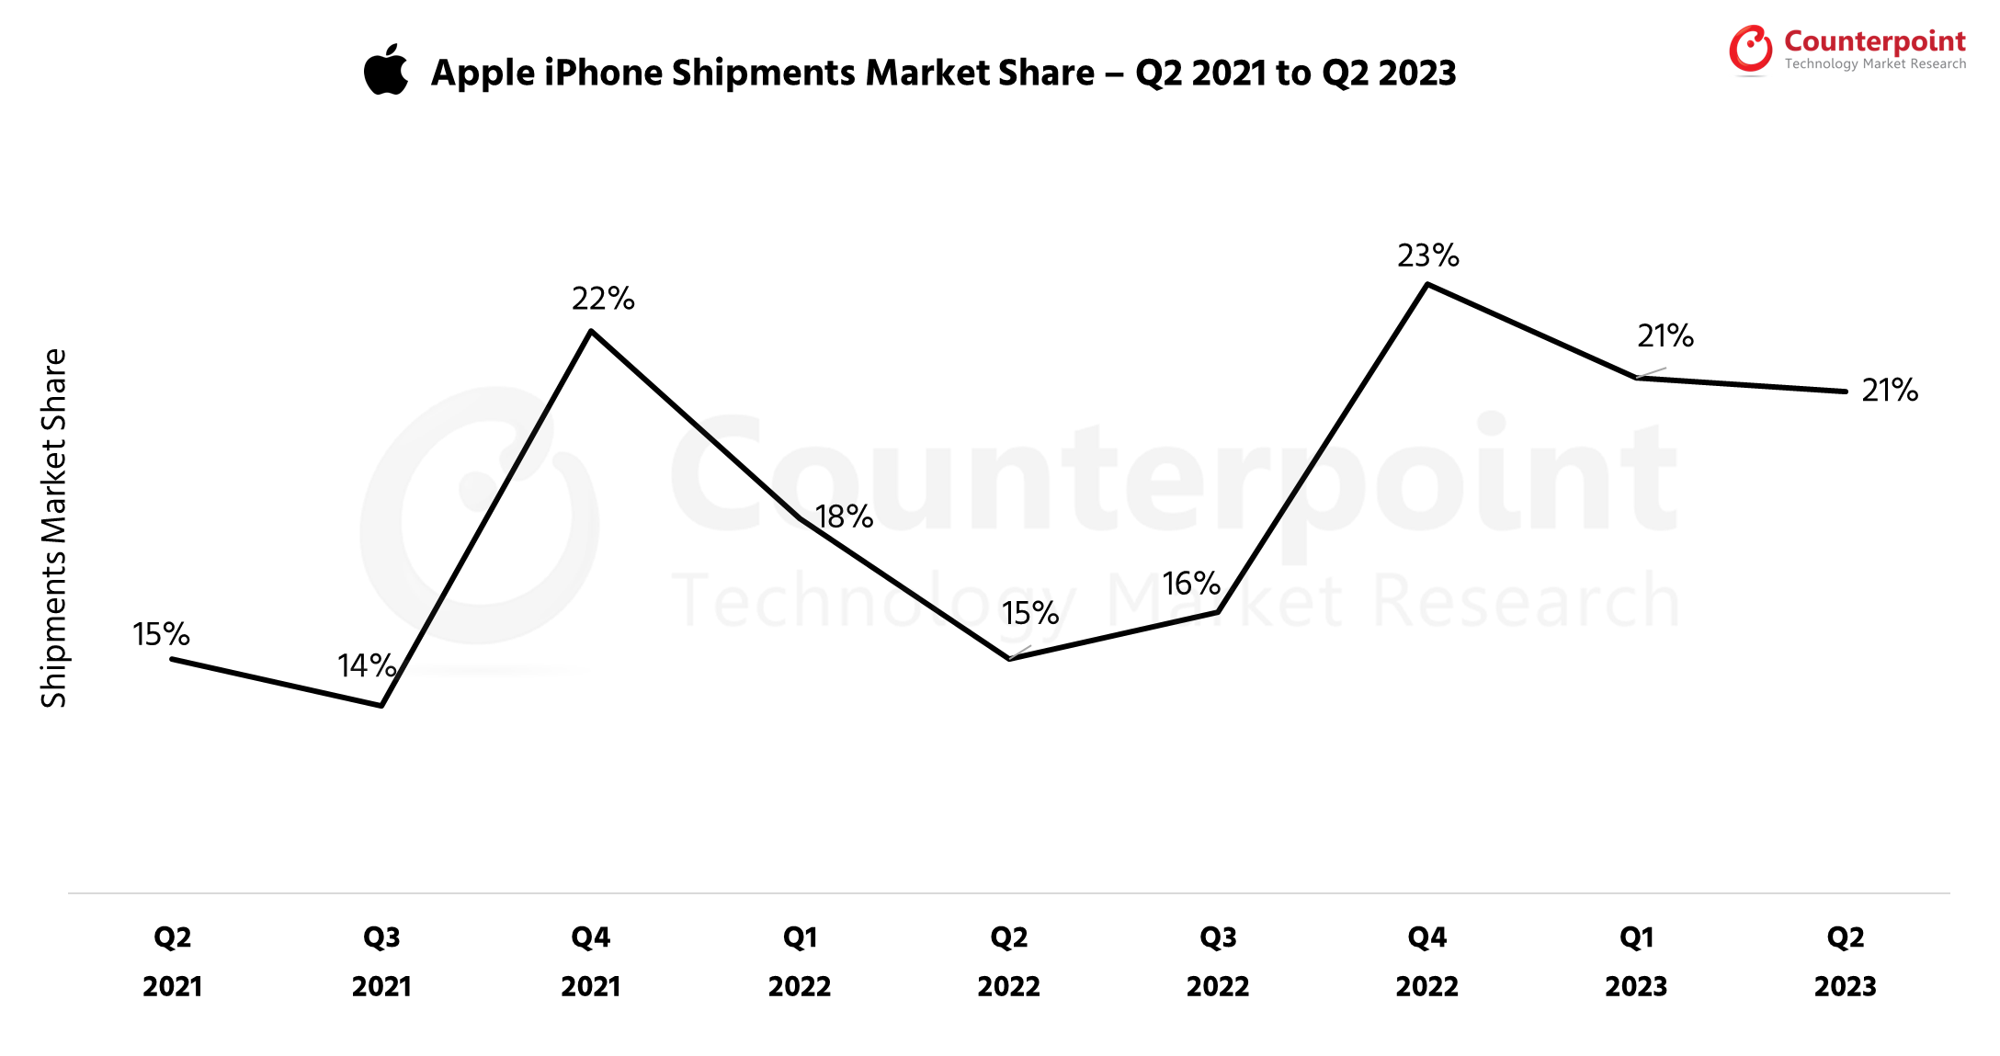 Apple iPhone Shipments Market Share Q2 2023